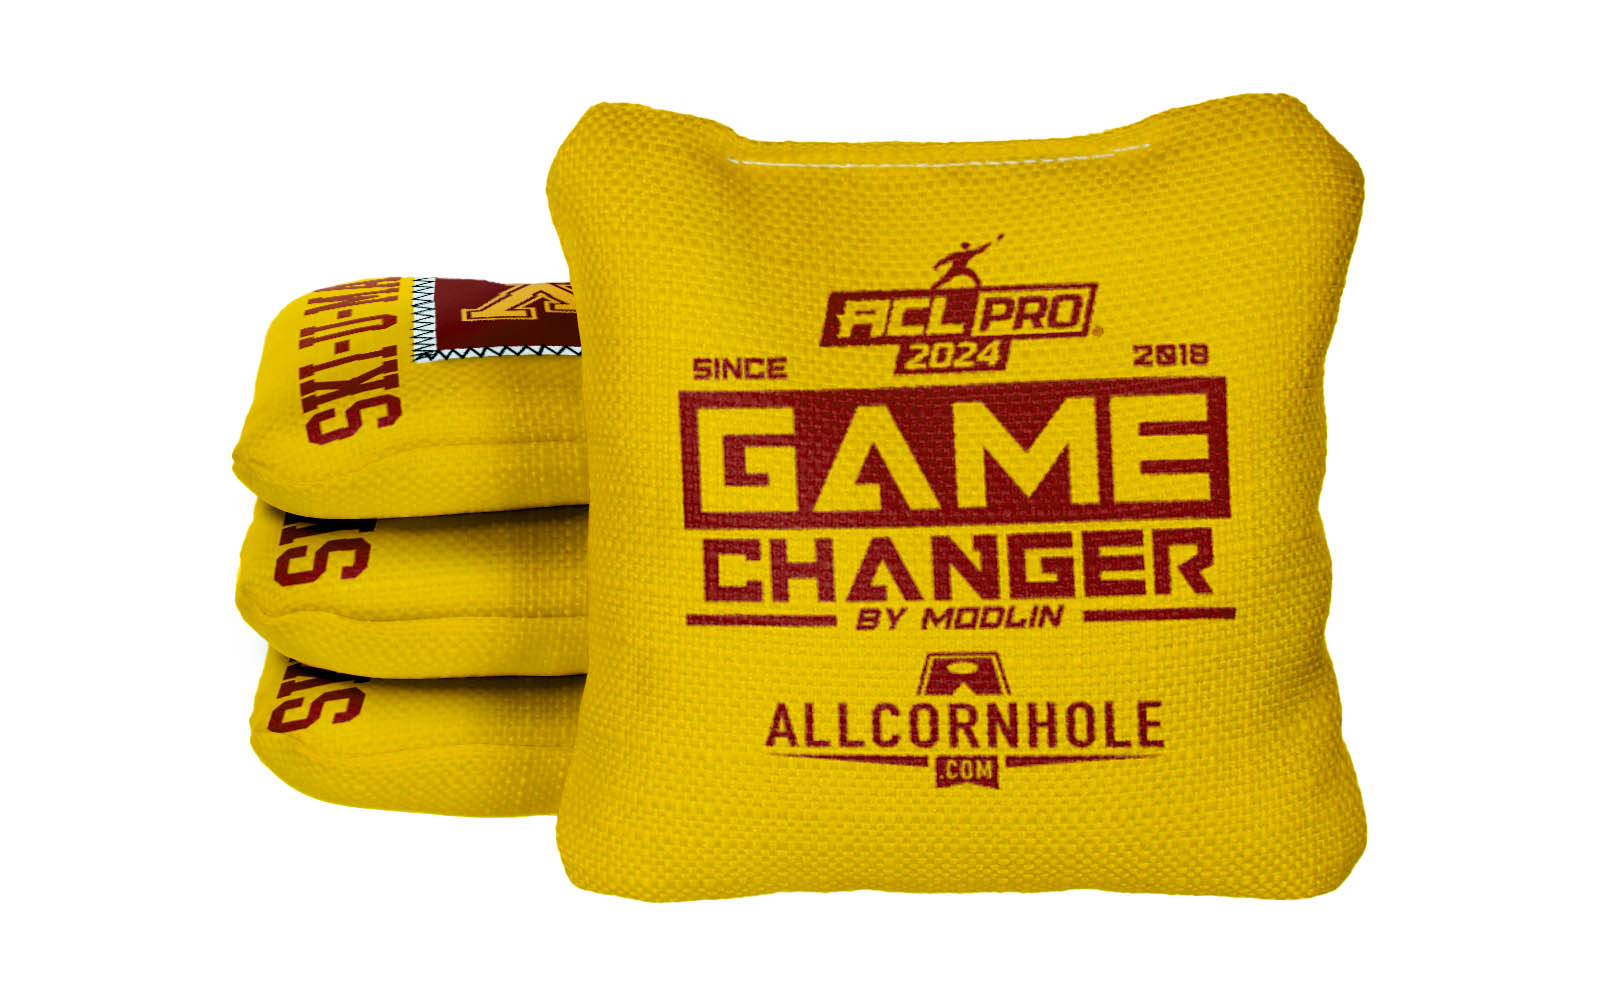 Officially Licensed Collegiate Cornhole Bags - AllCornhole Game Changers - Set of 4 - University of Minnesota